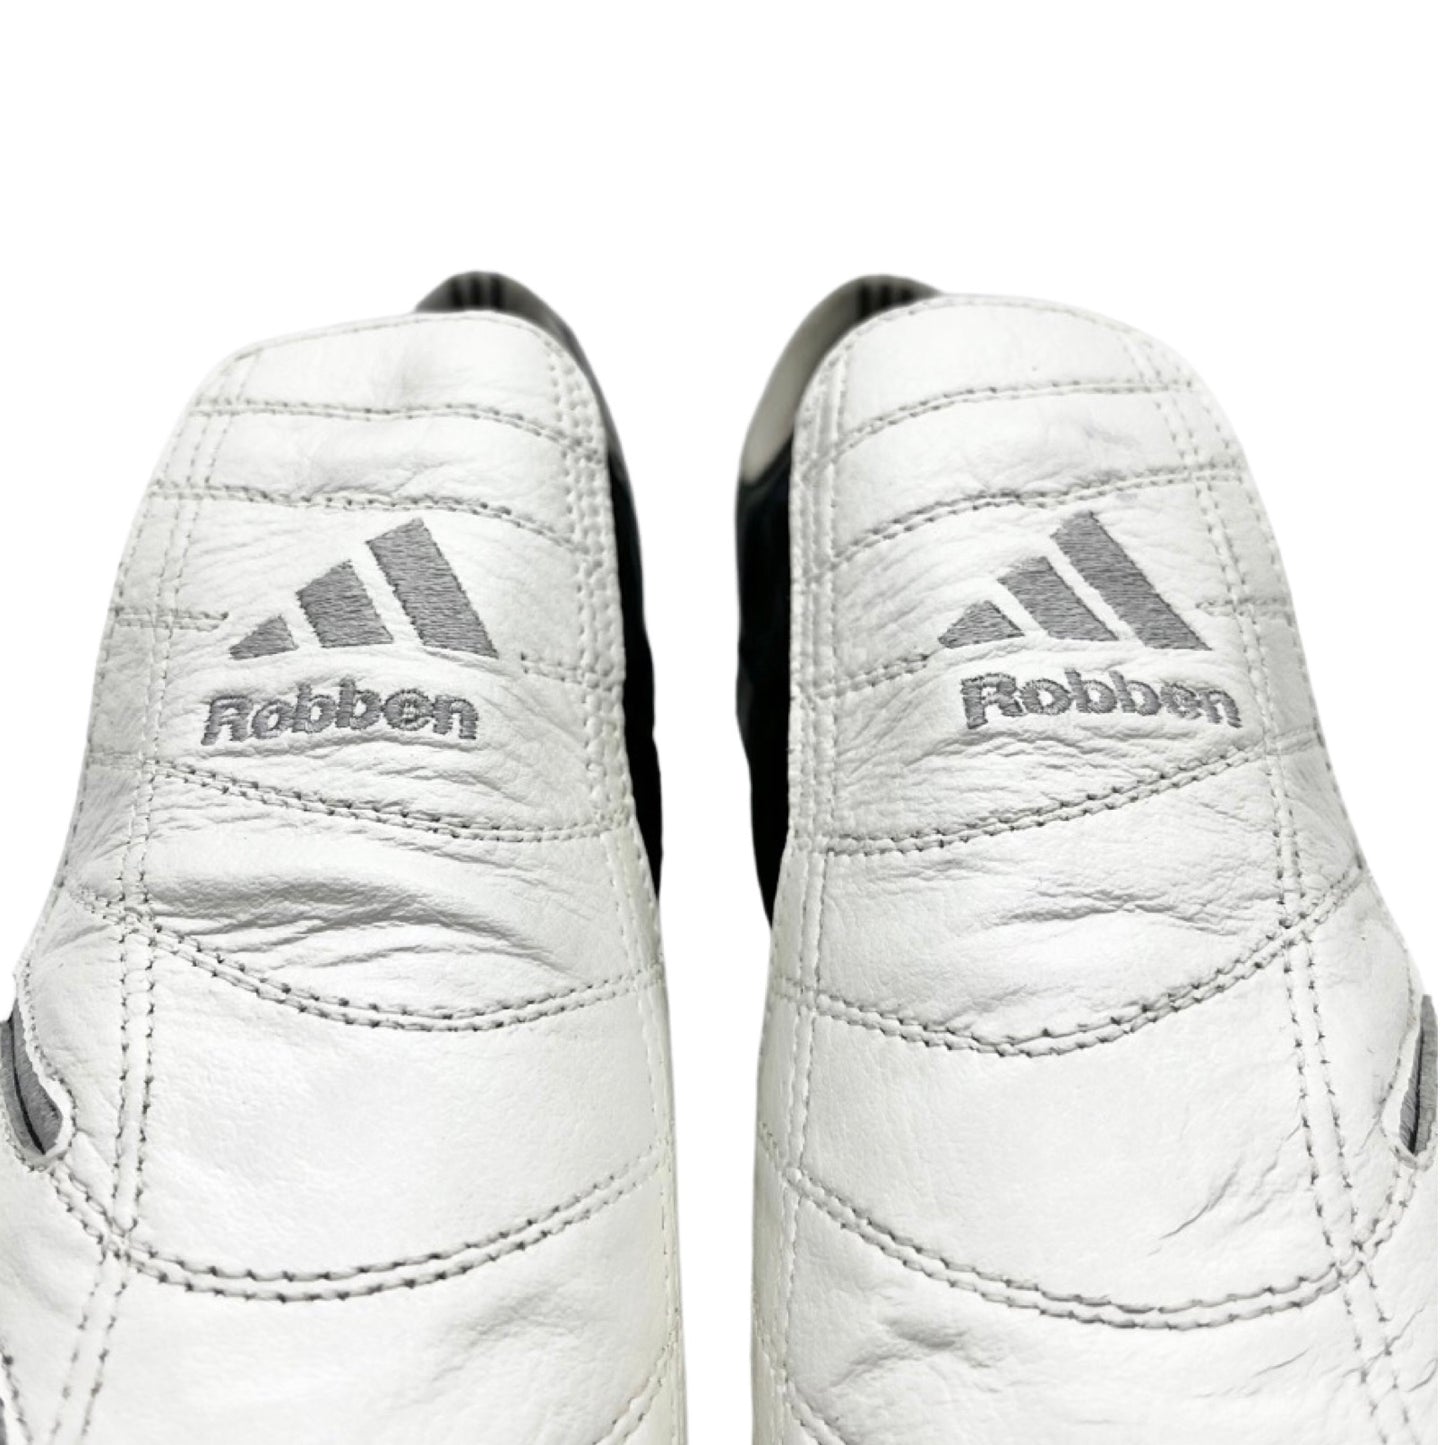 Arjen Robben Match Adidas F50+ usado